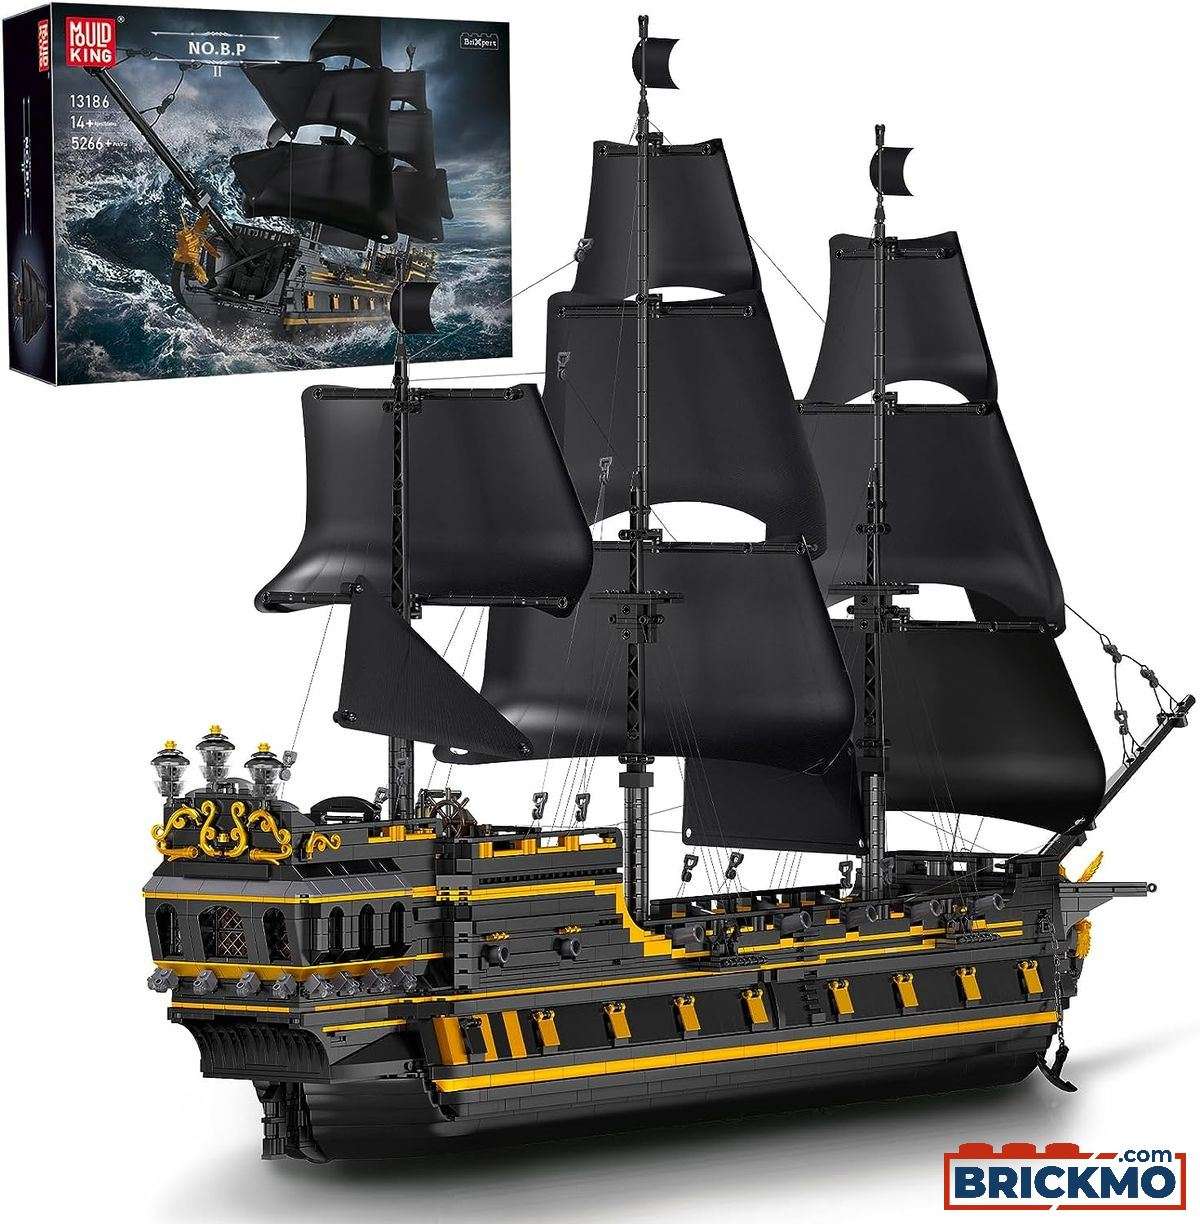 Mould King Black Pearl Piraten Schiff 13186